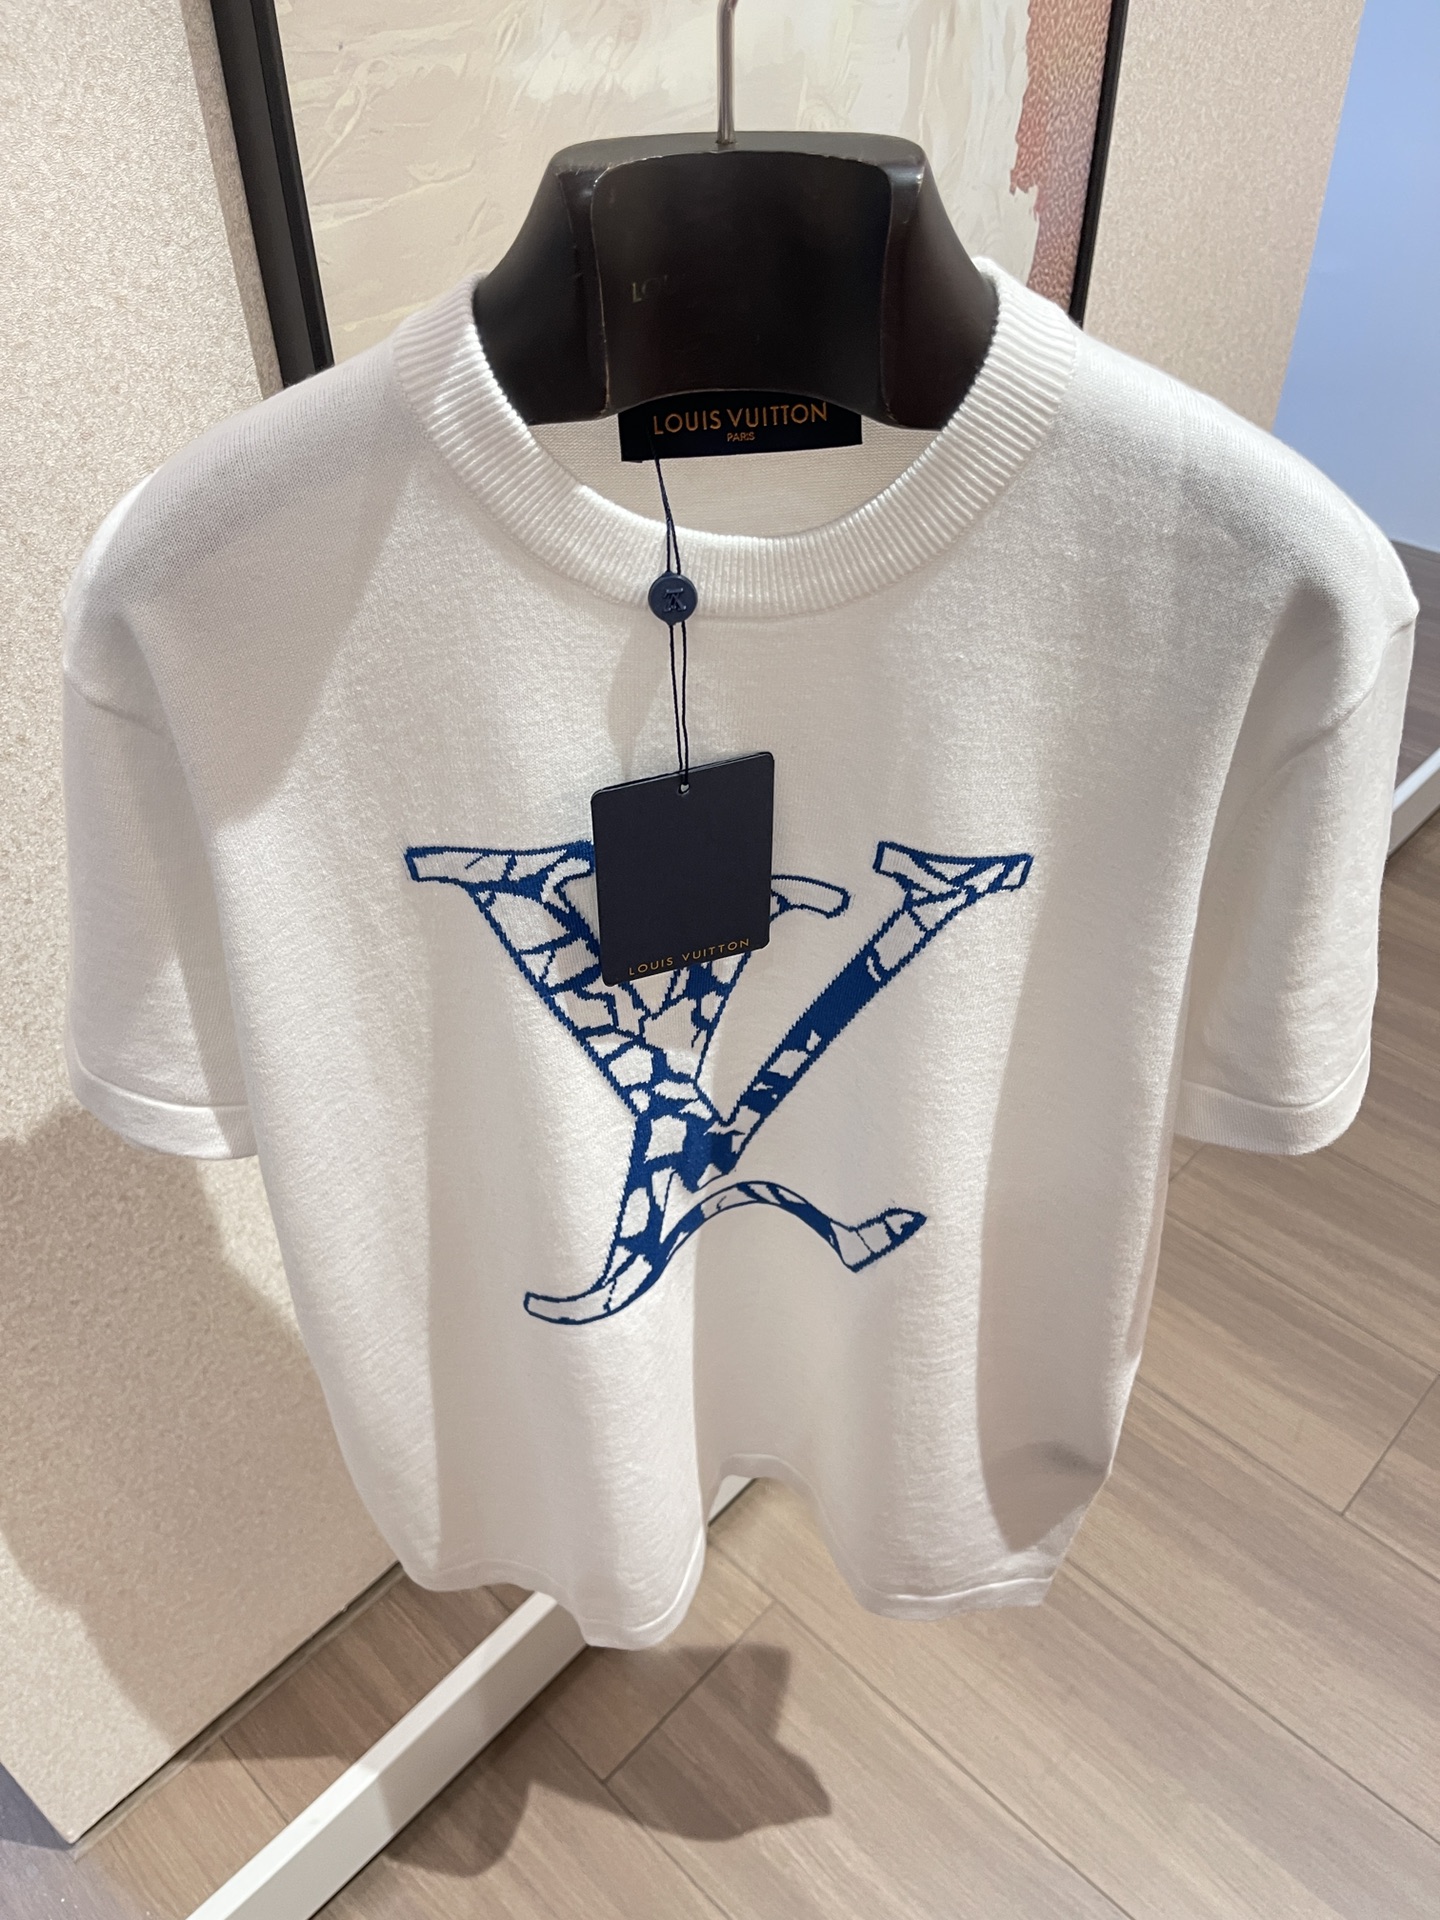 Louis Vuitton Clothing T-Shirt Knitting